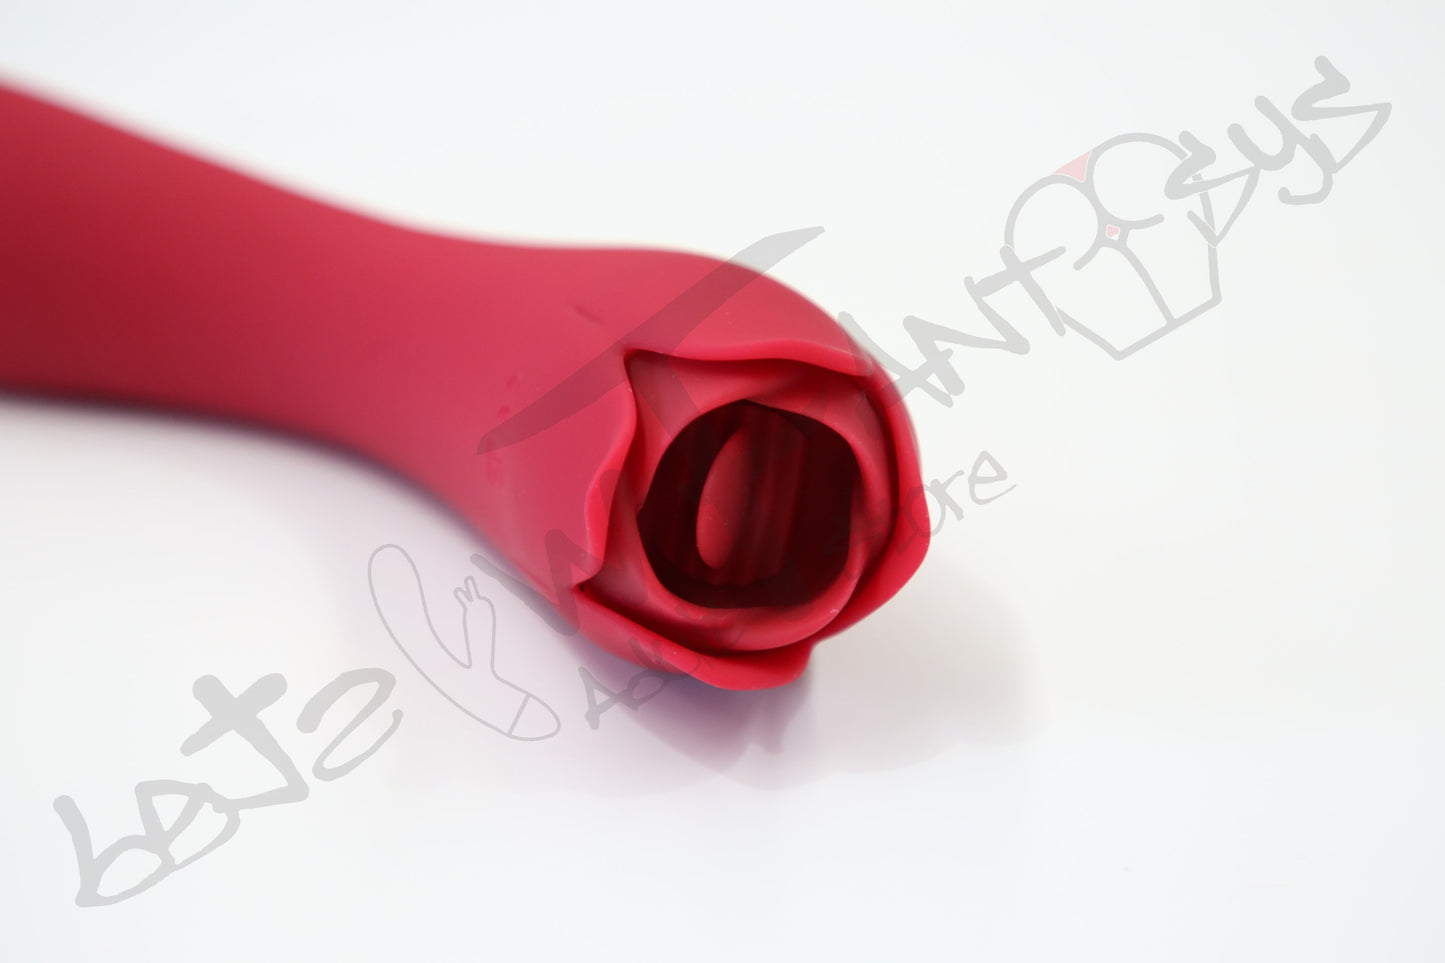 Double pleasure flickering rose vibrator